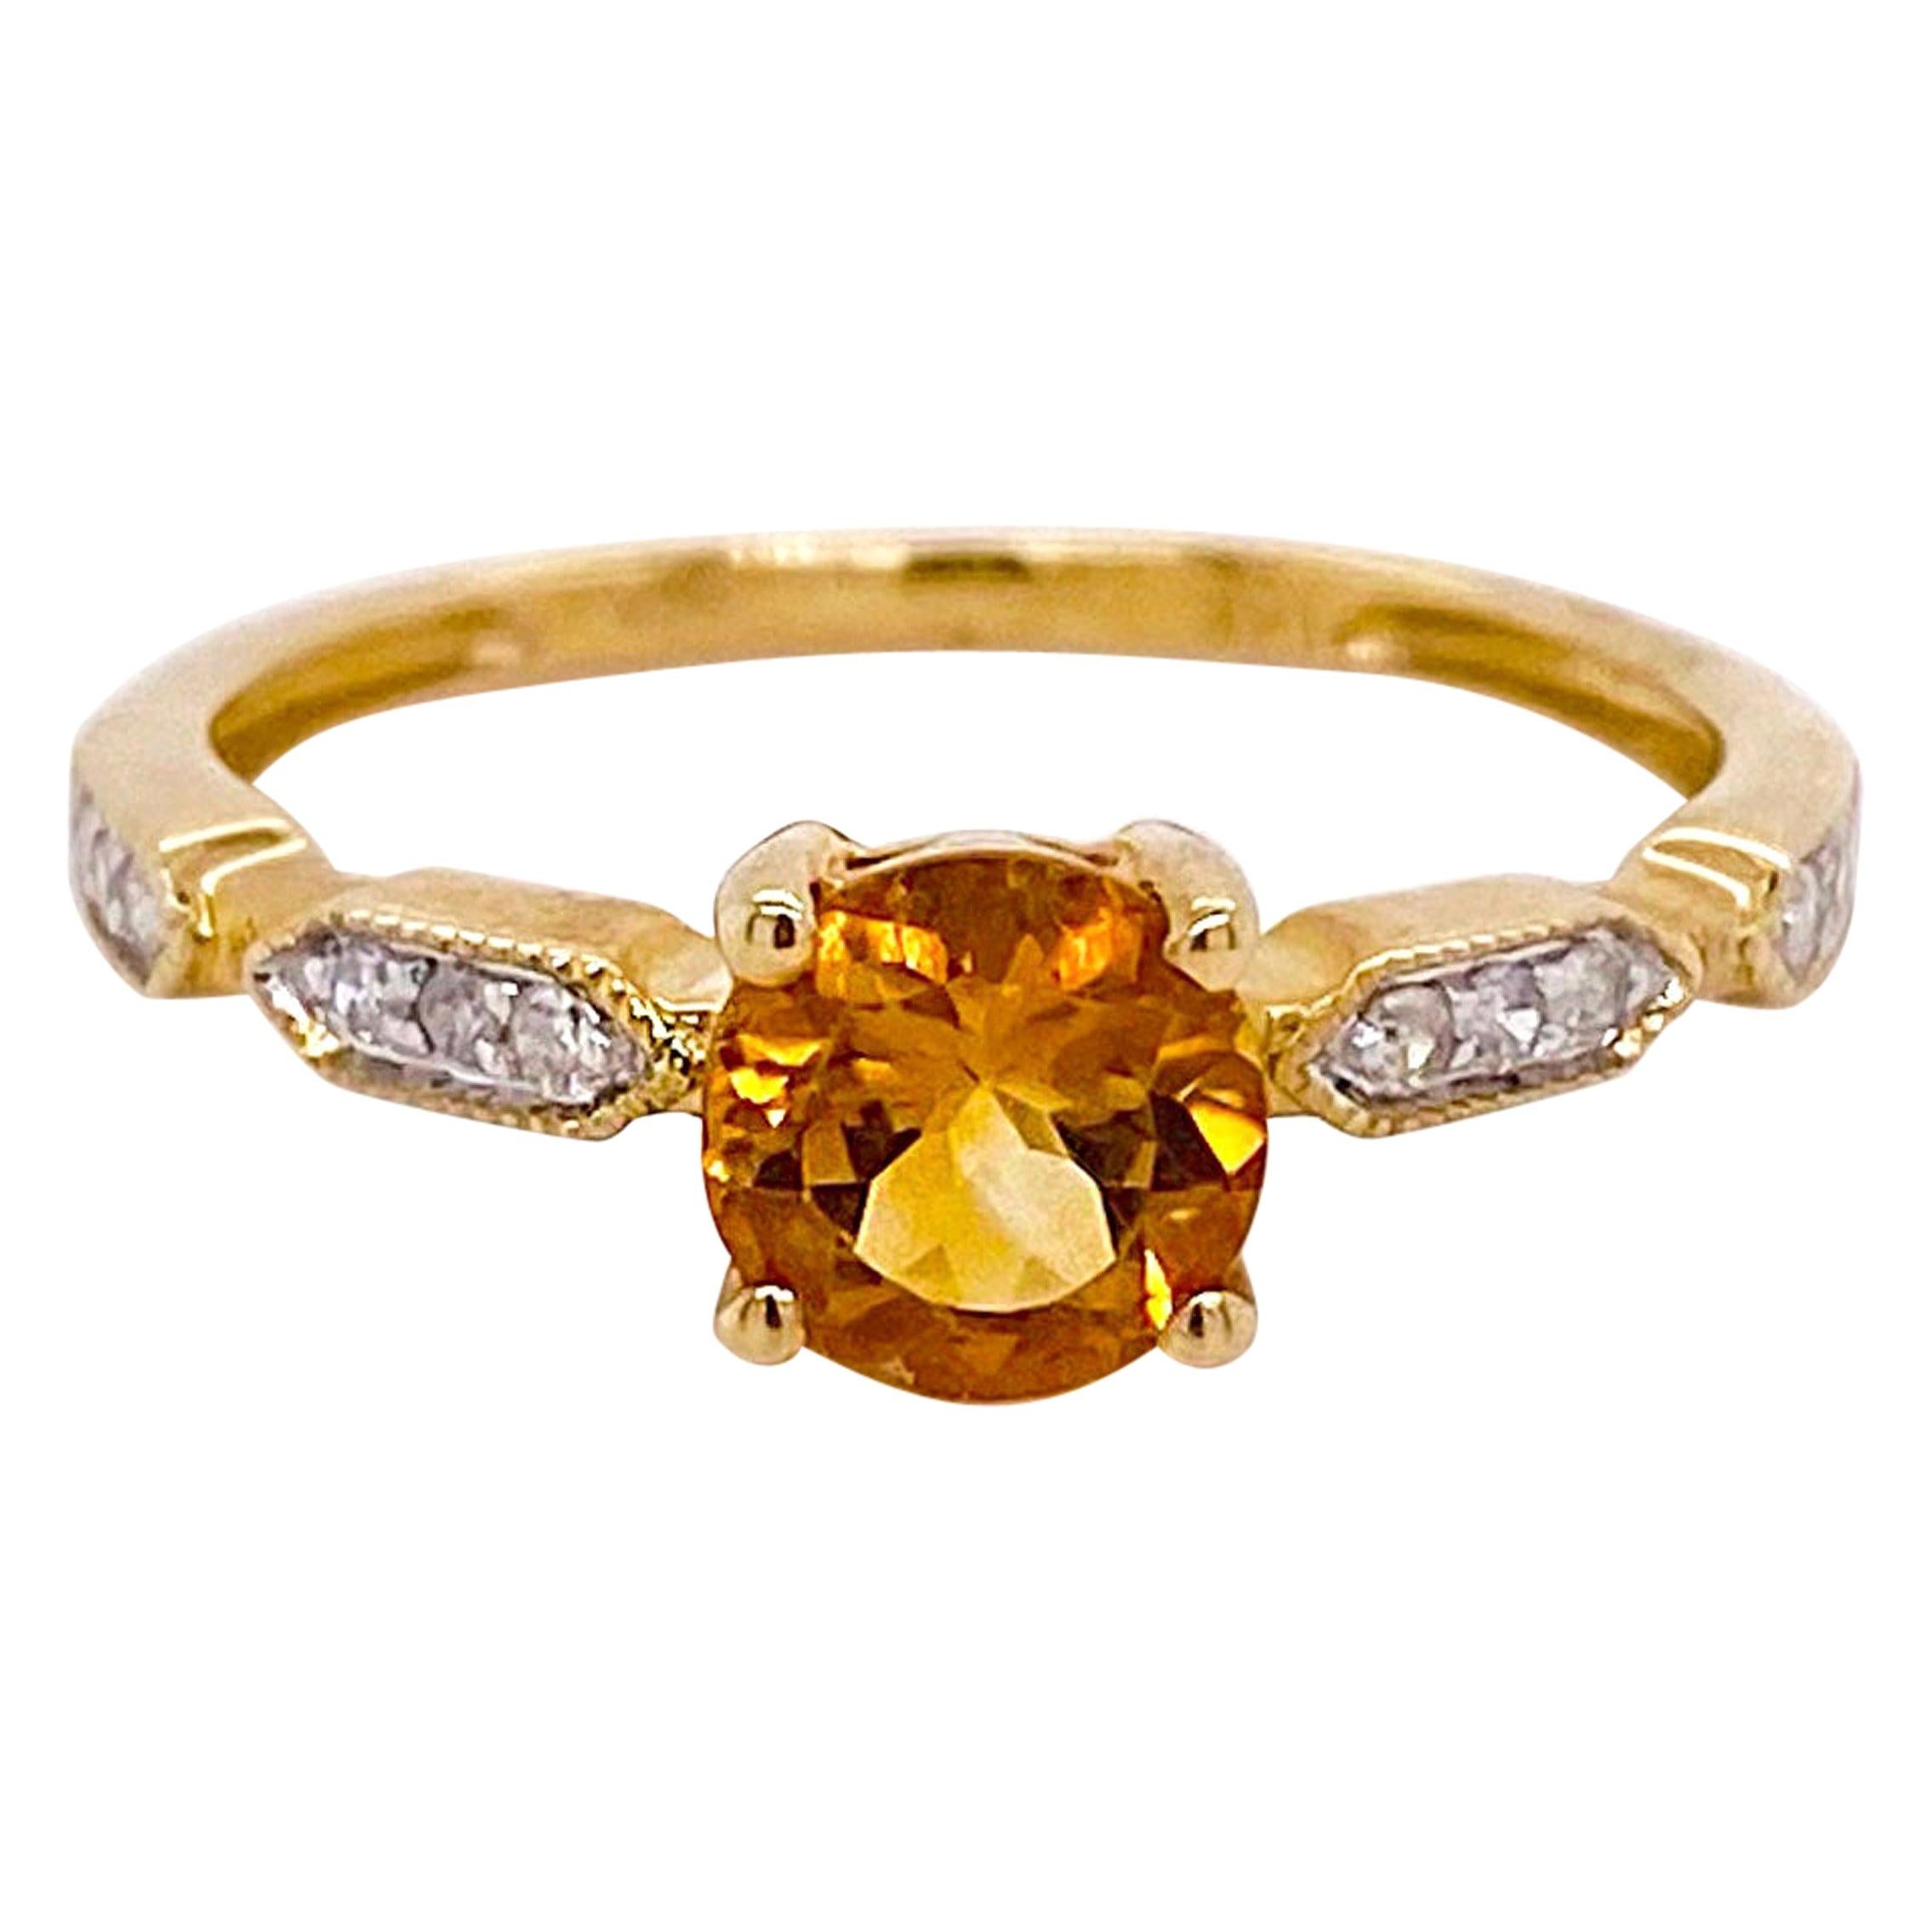 For Sale:  1.00 Carat Citrine and Diamond Ring 14 Karat Yellow Gold Ring November